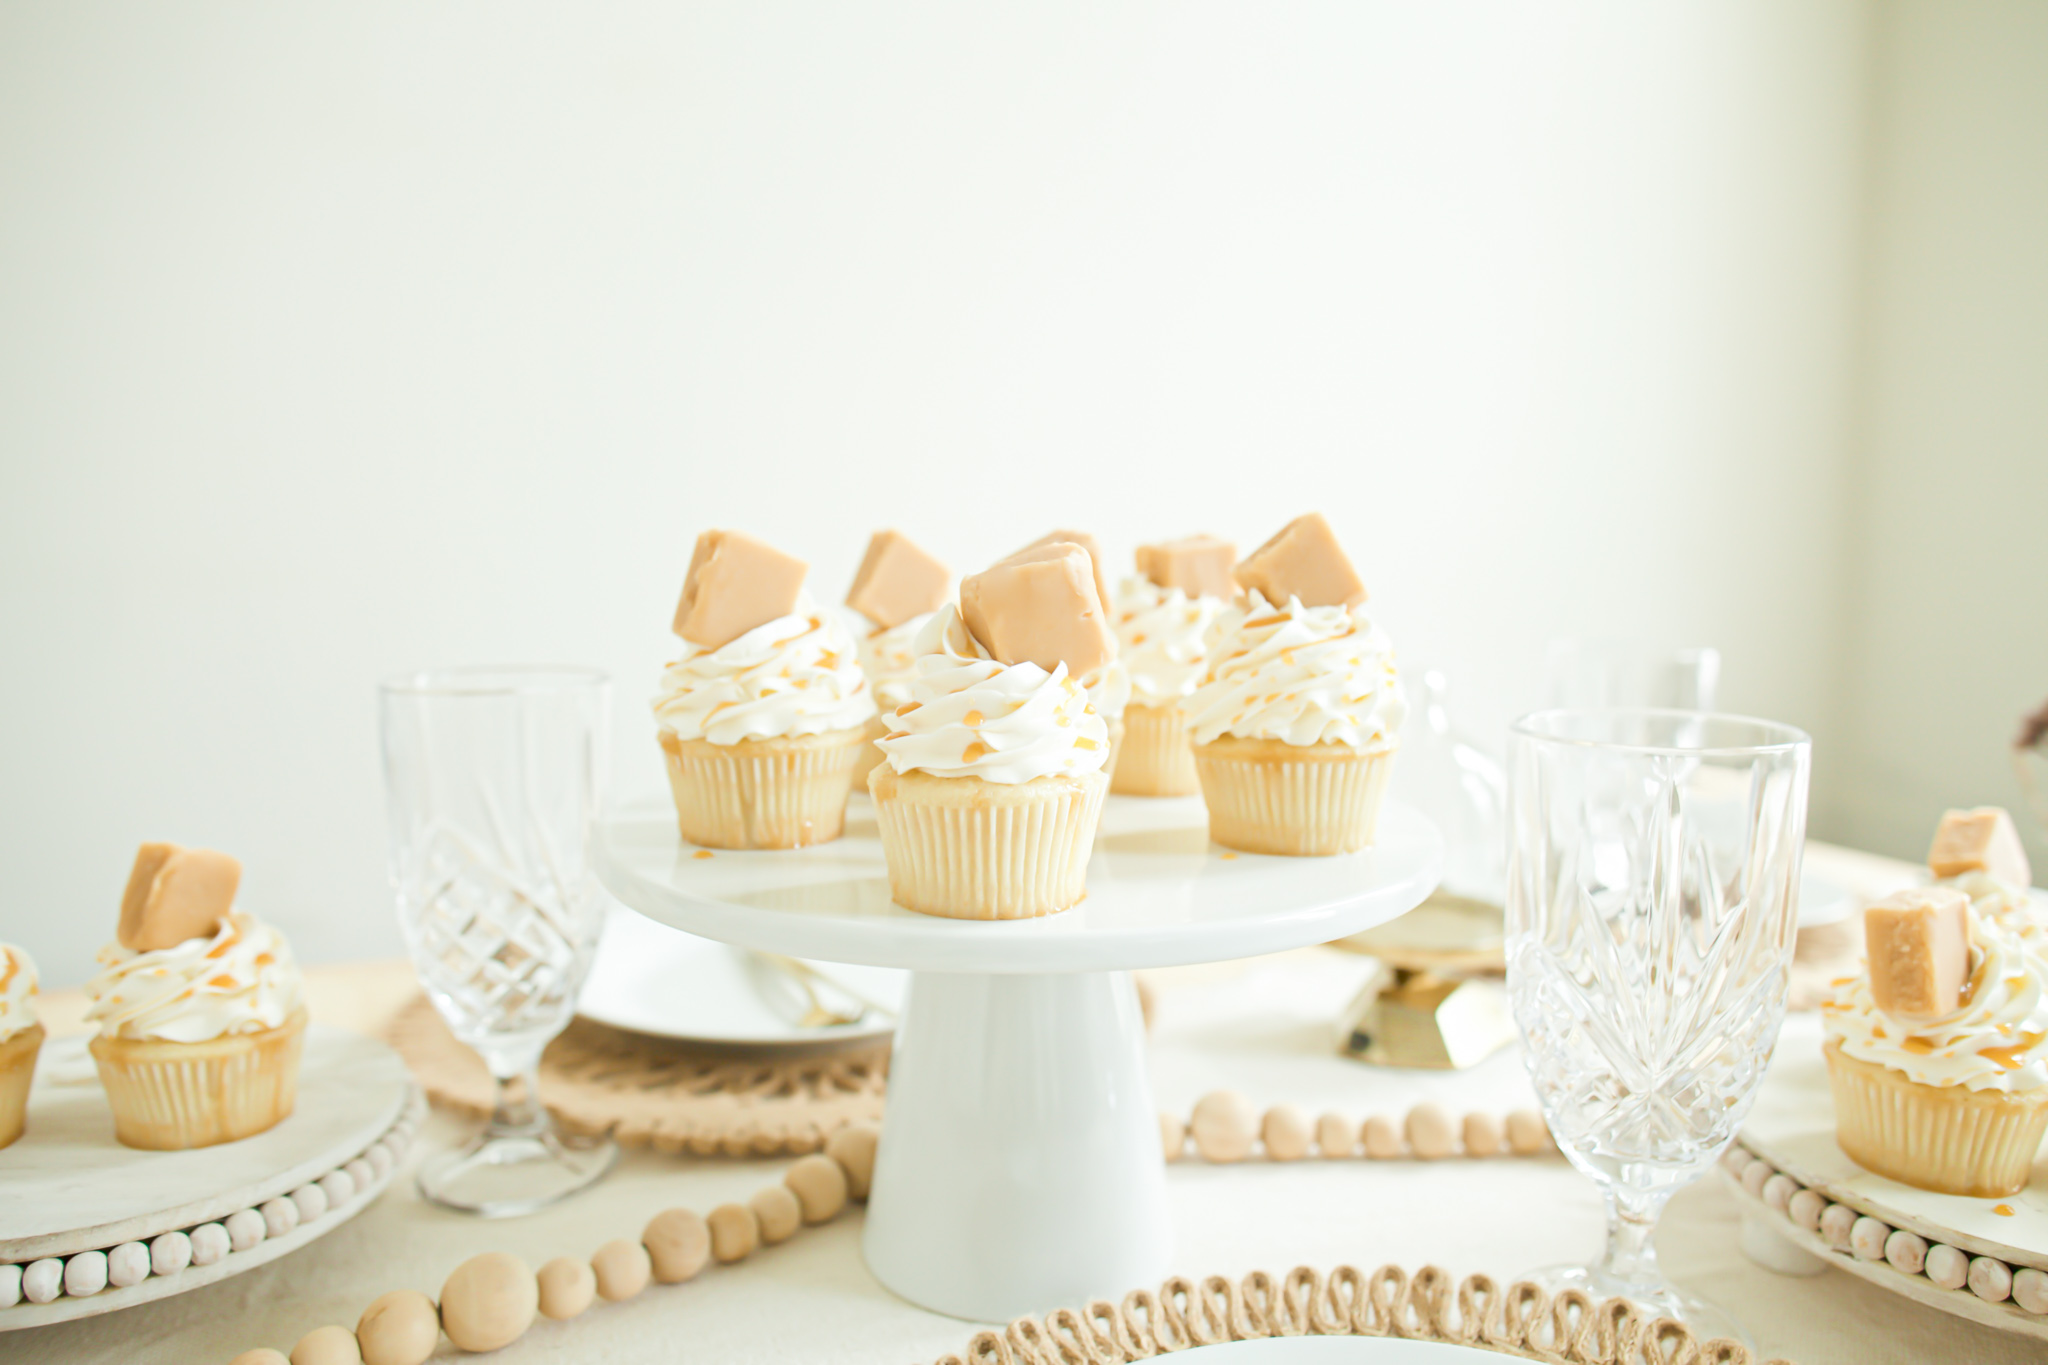 salted caramel cupcakes with vanilla fudge on white cake platter